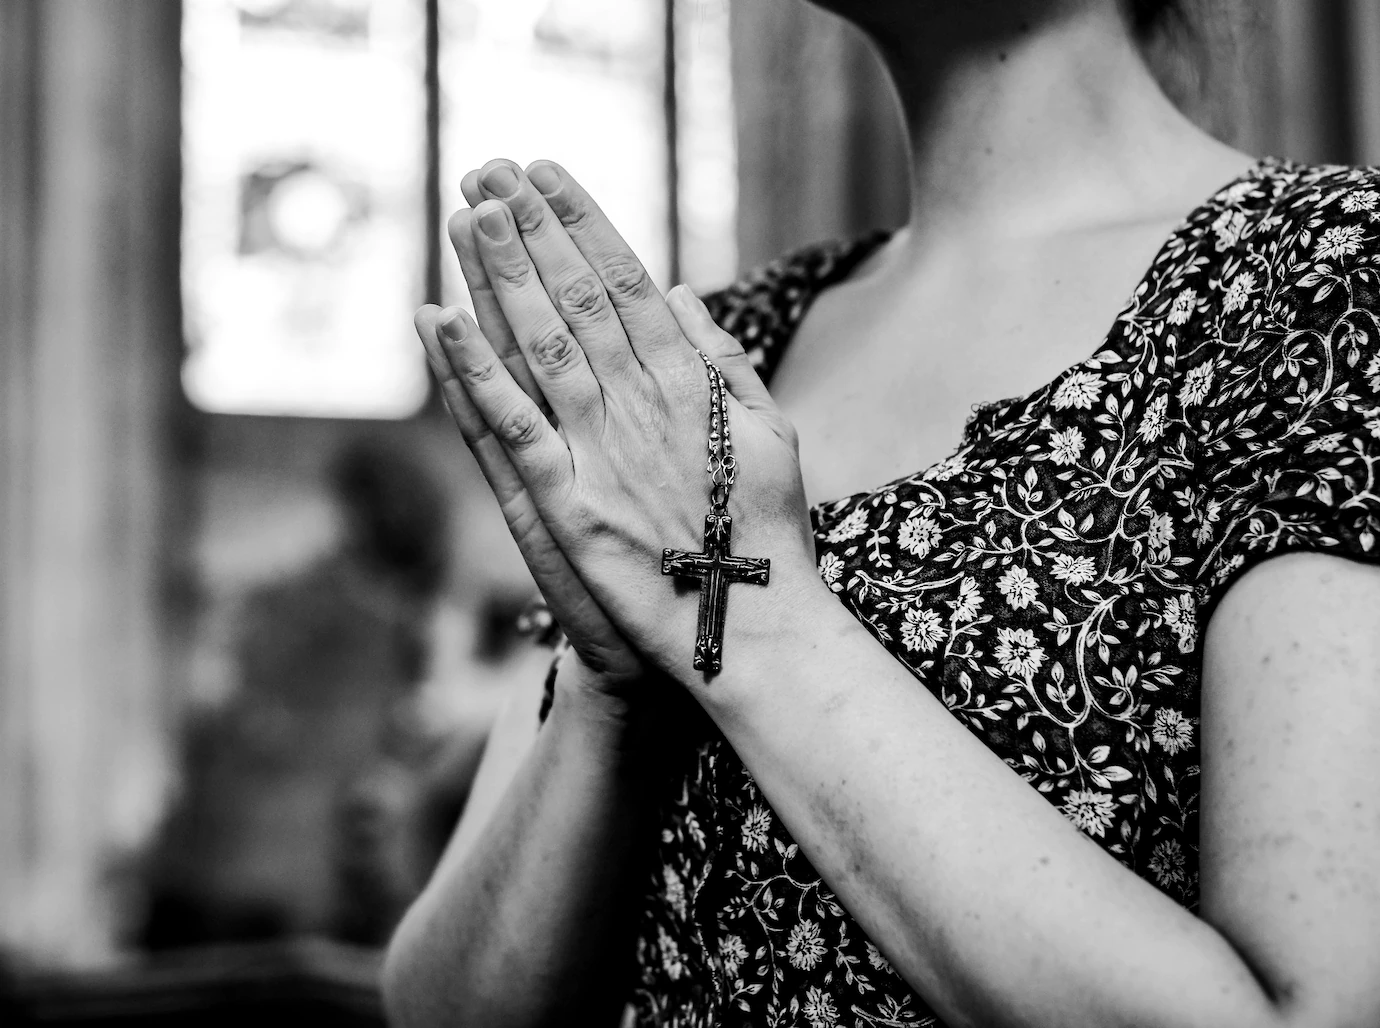 Catholic Woman Praying With Rosary Church 53876 137658